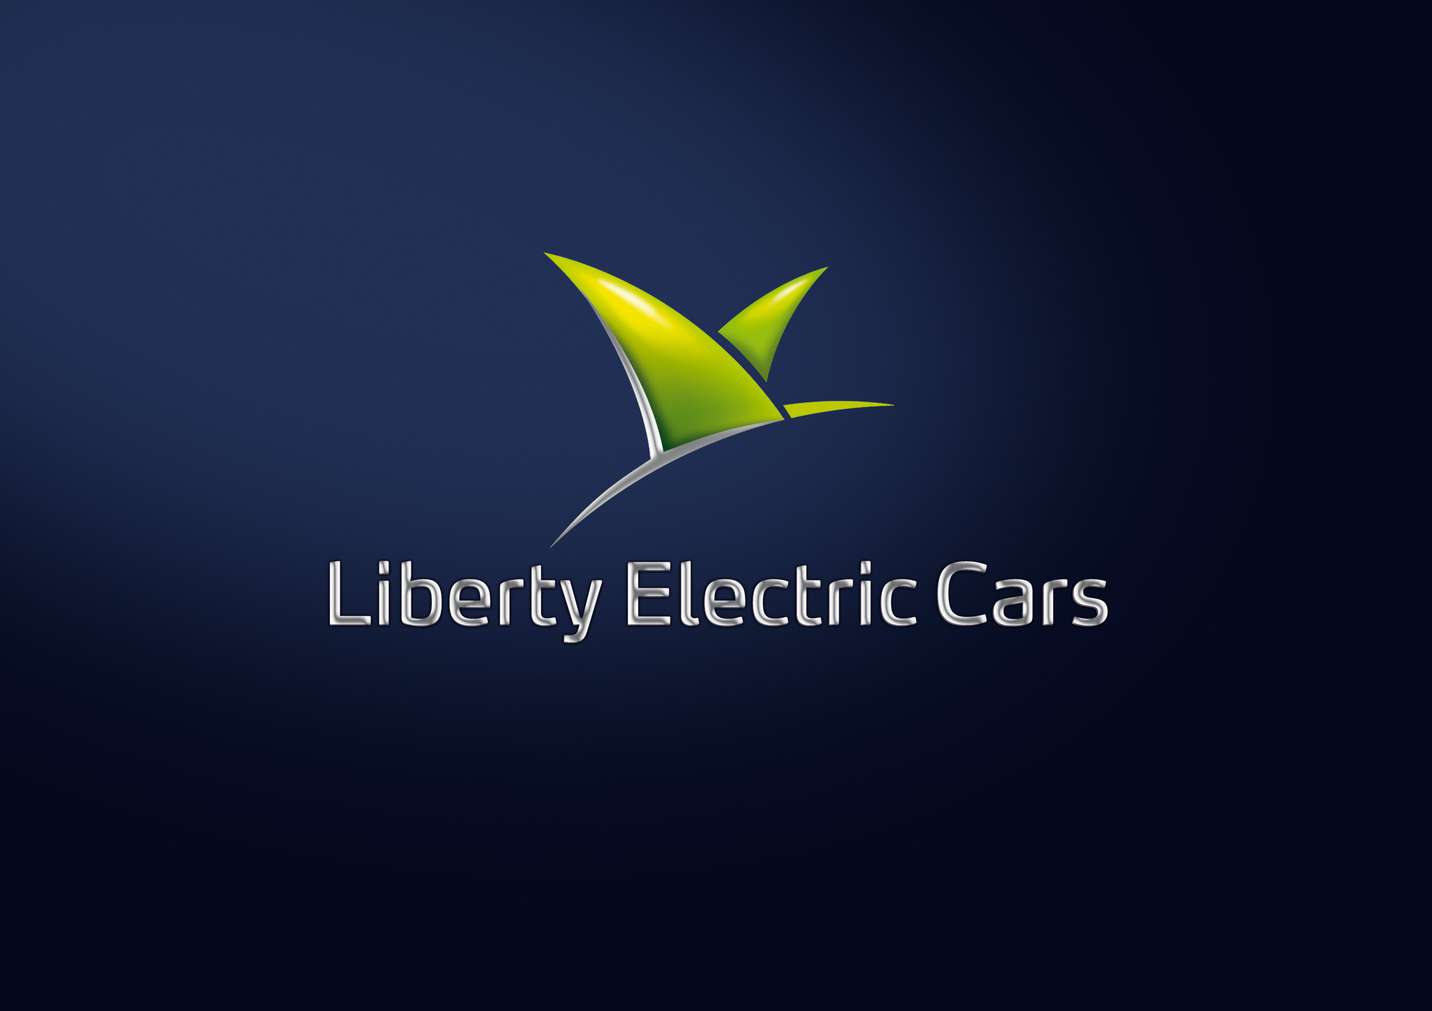 Liberty Electric Cars Ltd.